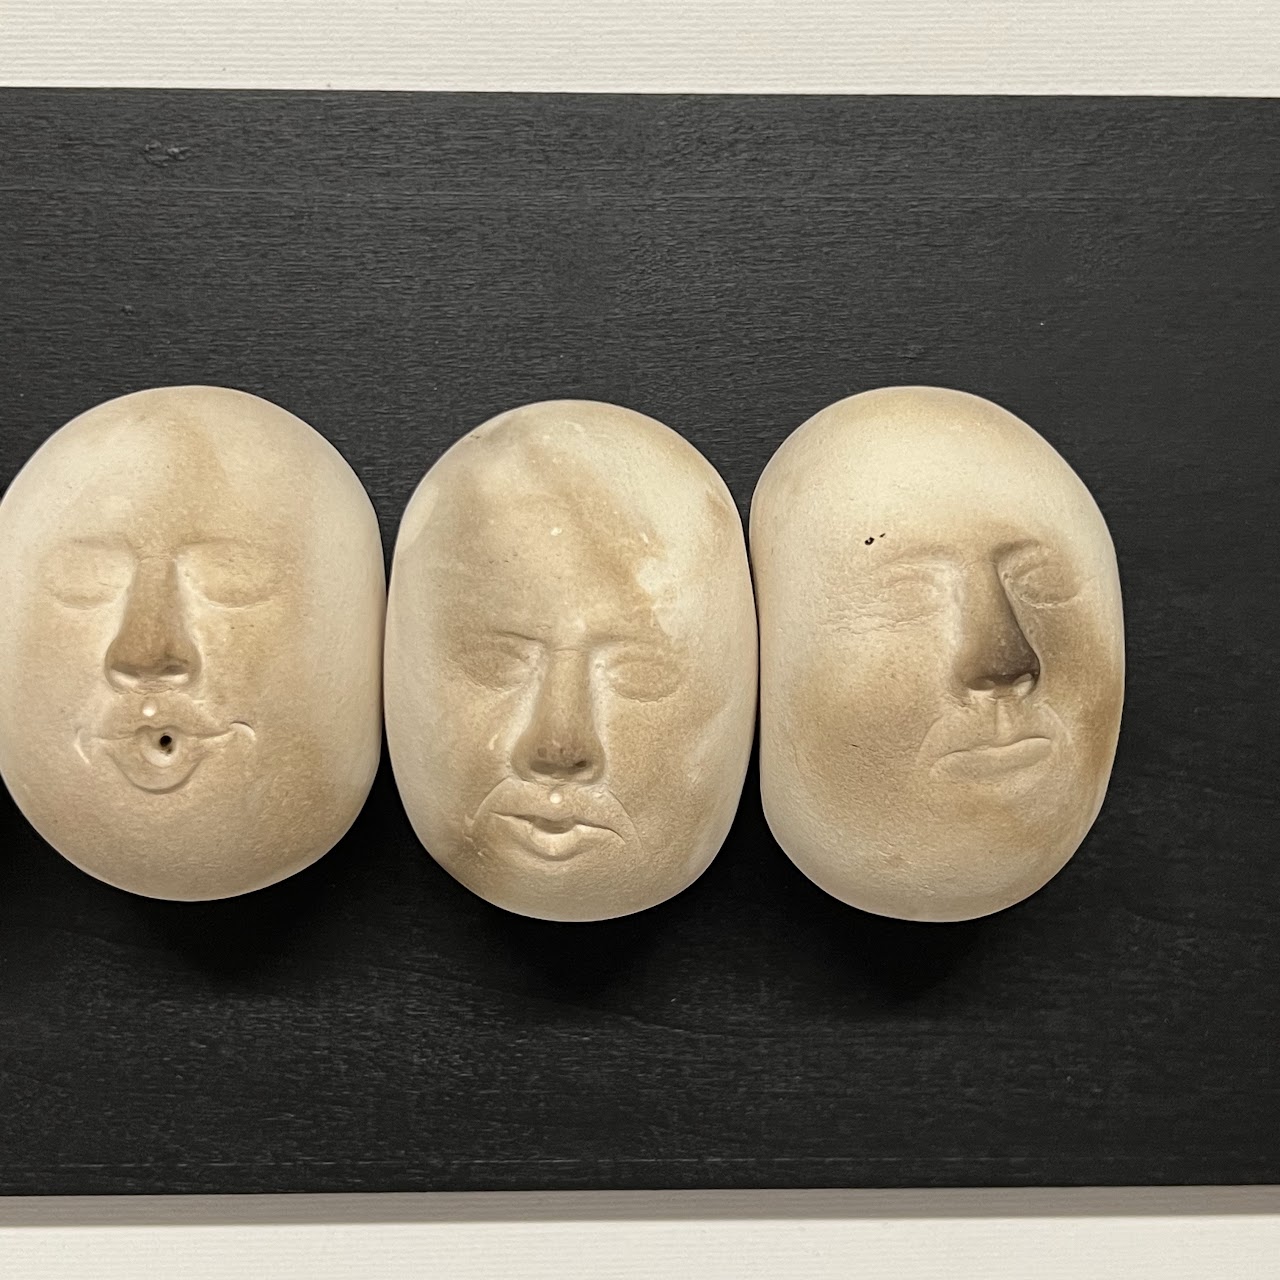 Allen Littlefield 'Group Therapy' Ceramic Sculpture